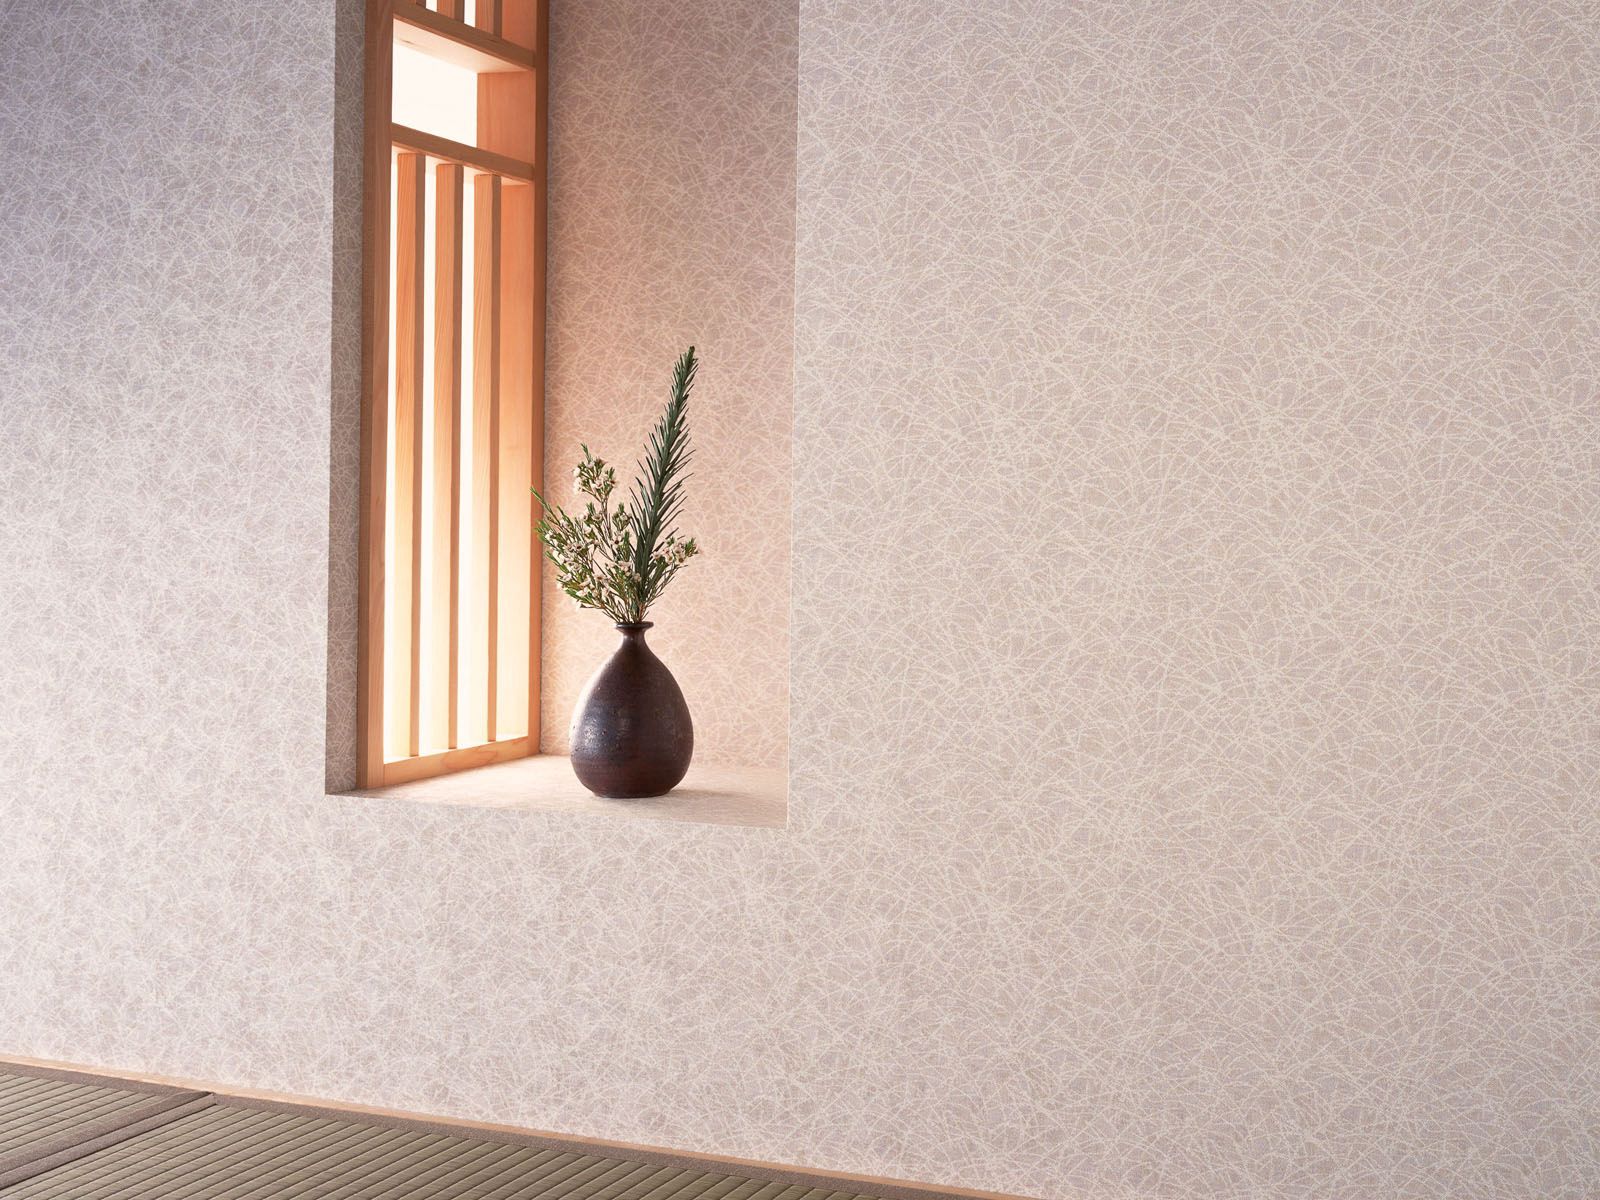 Mobile wallpaper design, flower, miscellanea, miscellaneous, window, vase